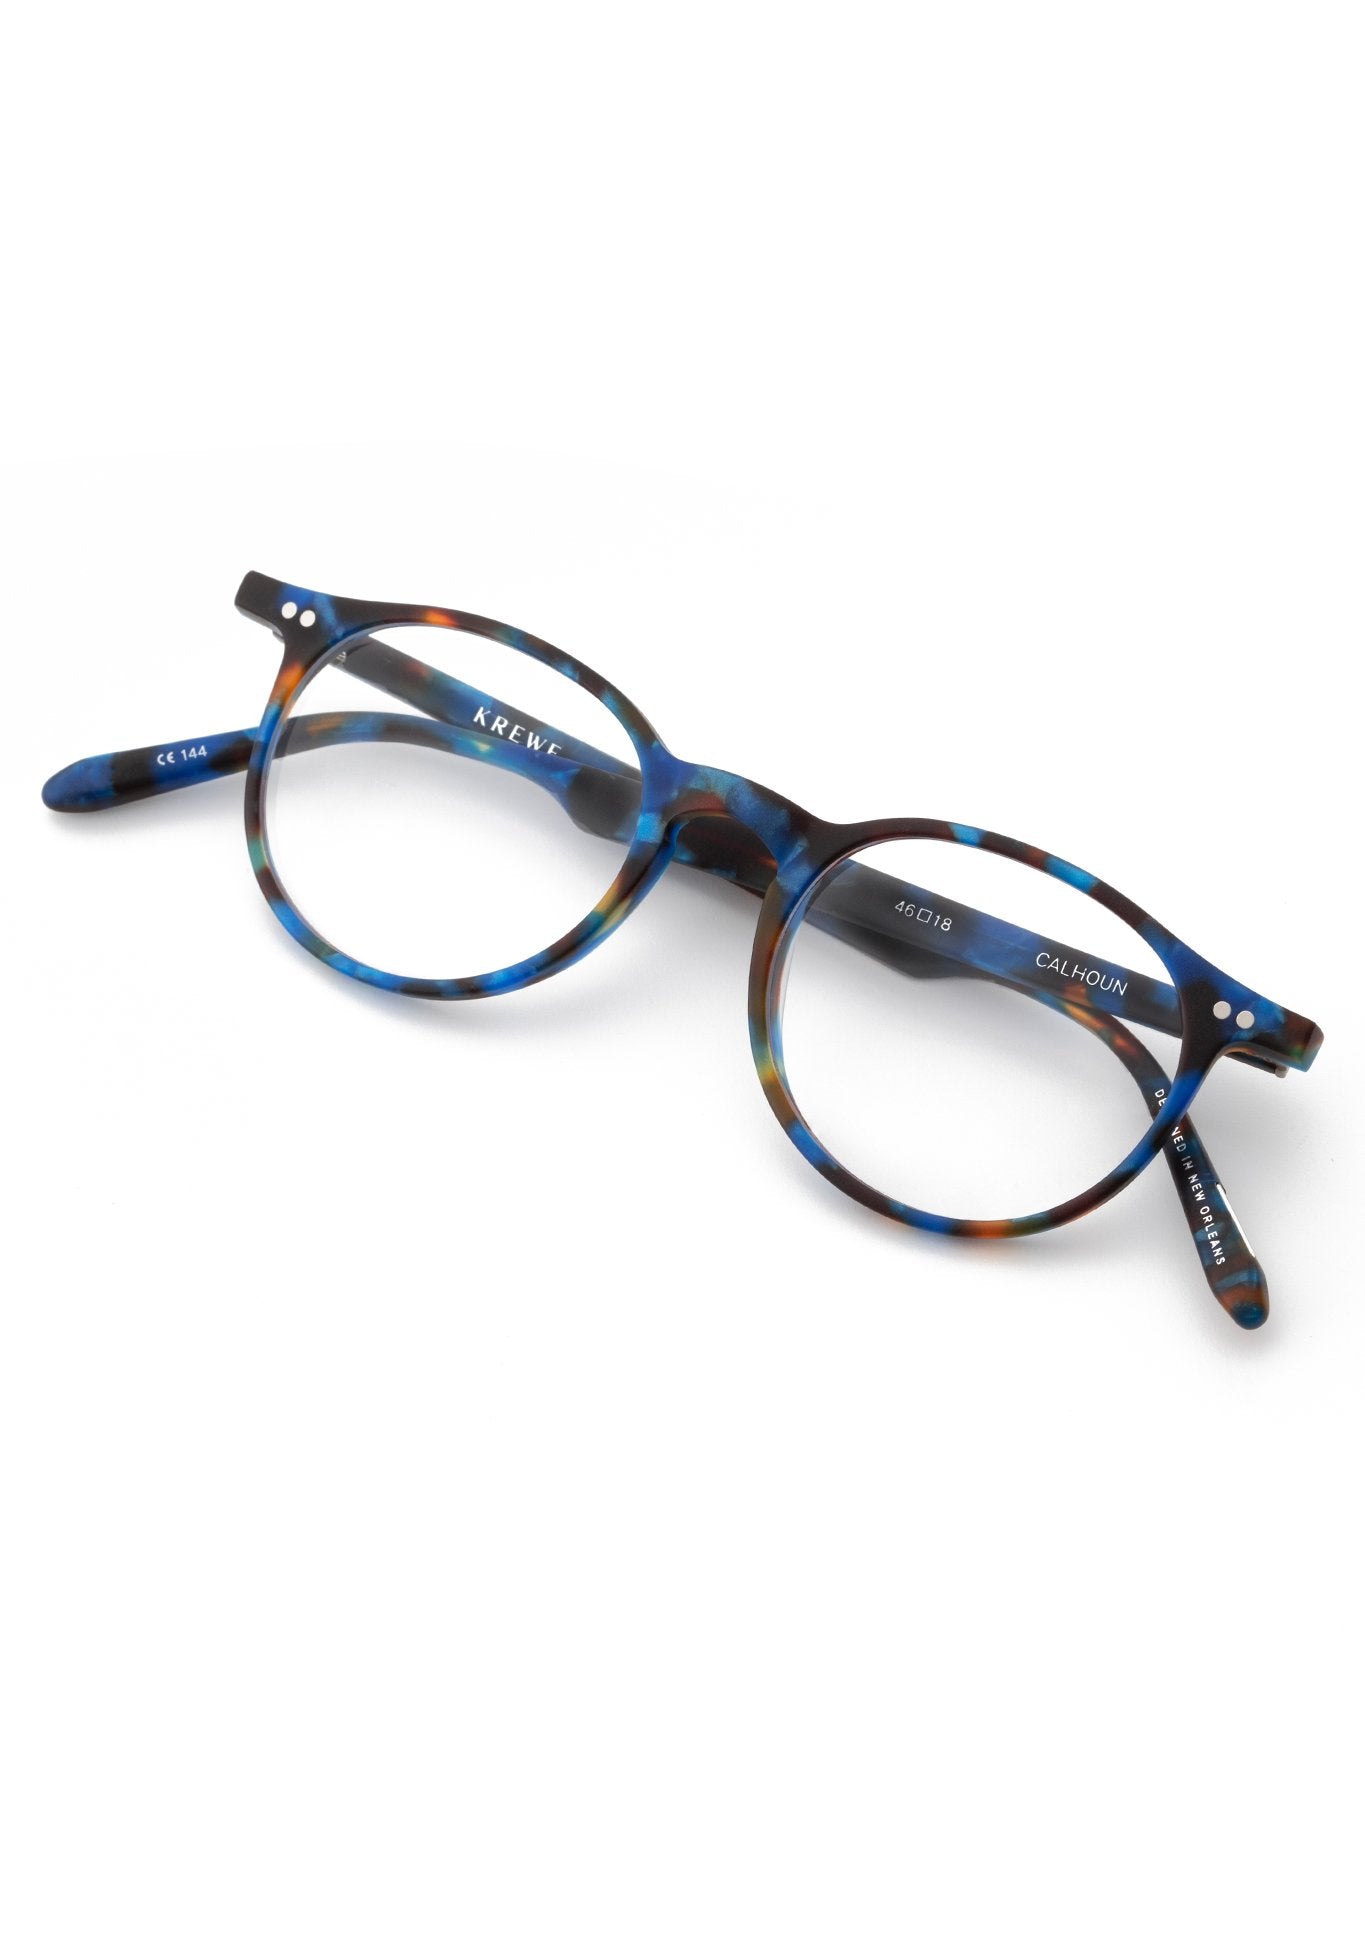 KREWE CARSON | Matte Blue Steel Handcrafted, Luxury Blue Tortoise Shell Acetate Eyeglasses